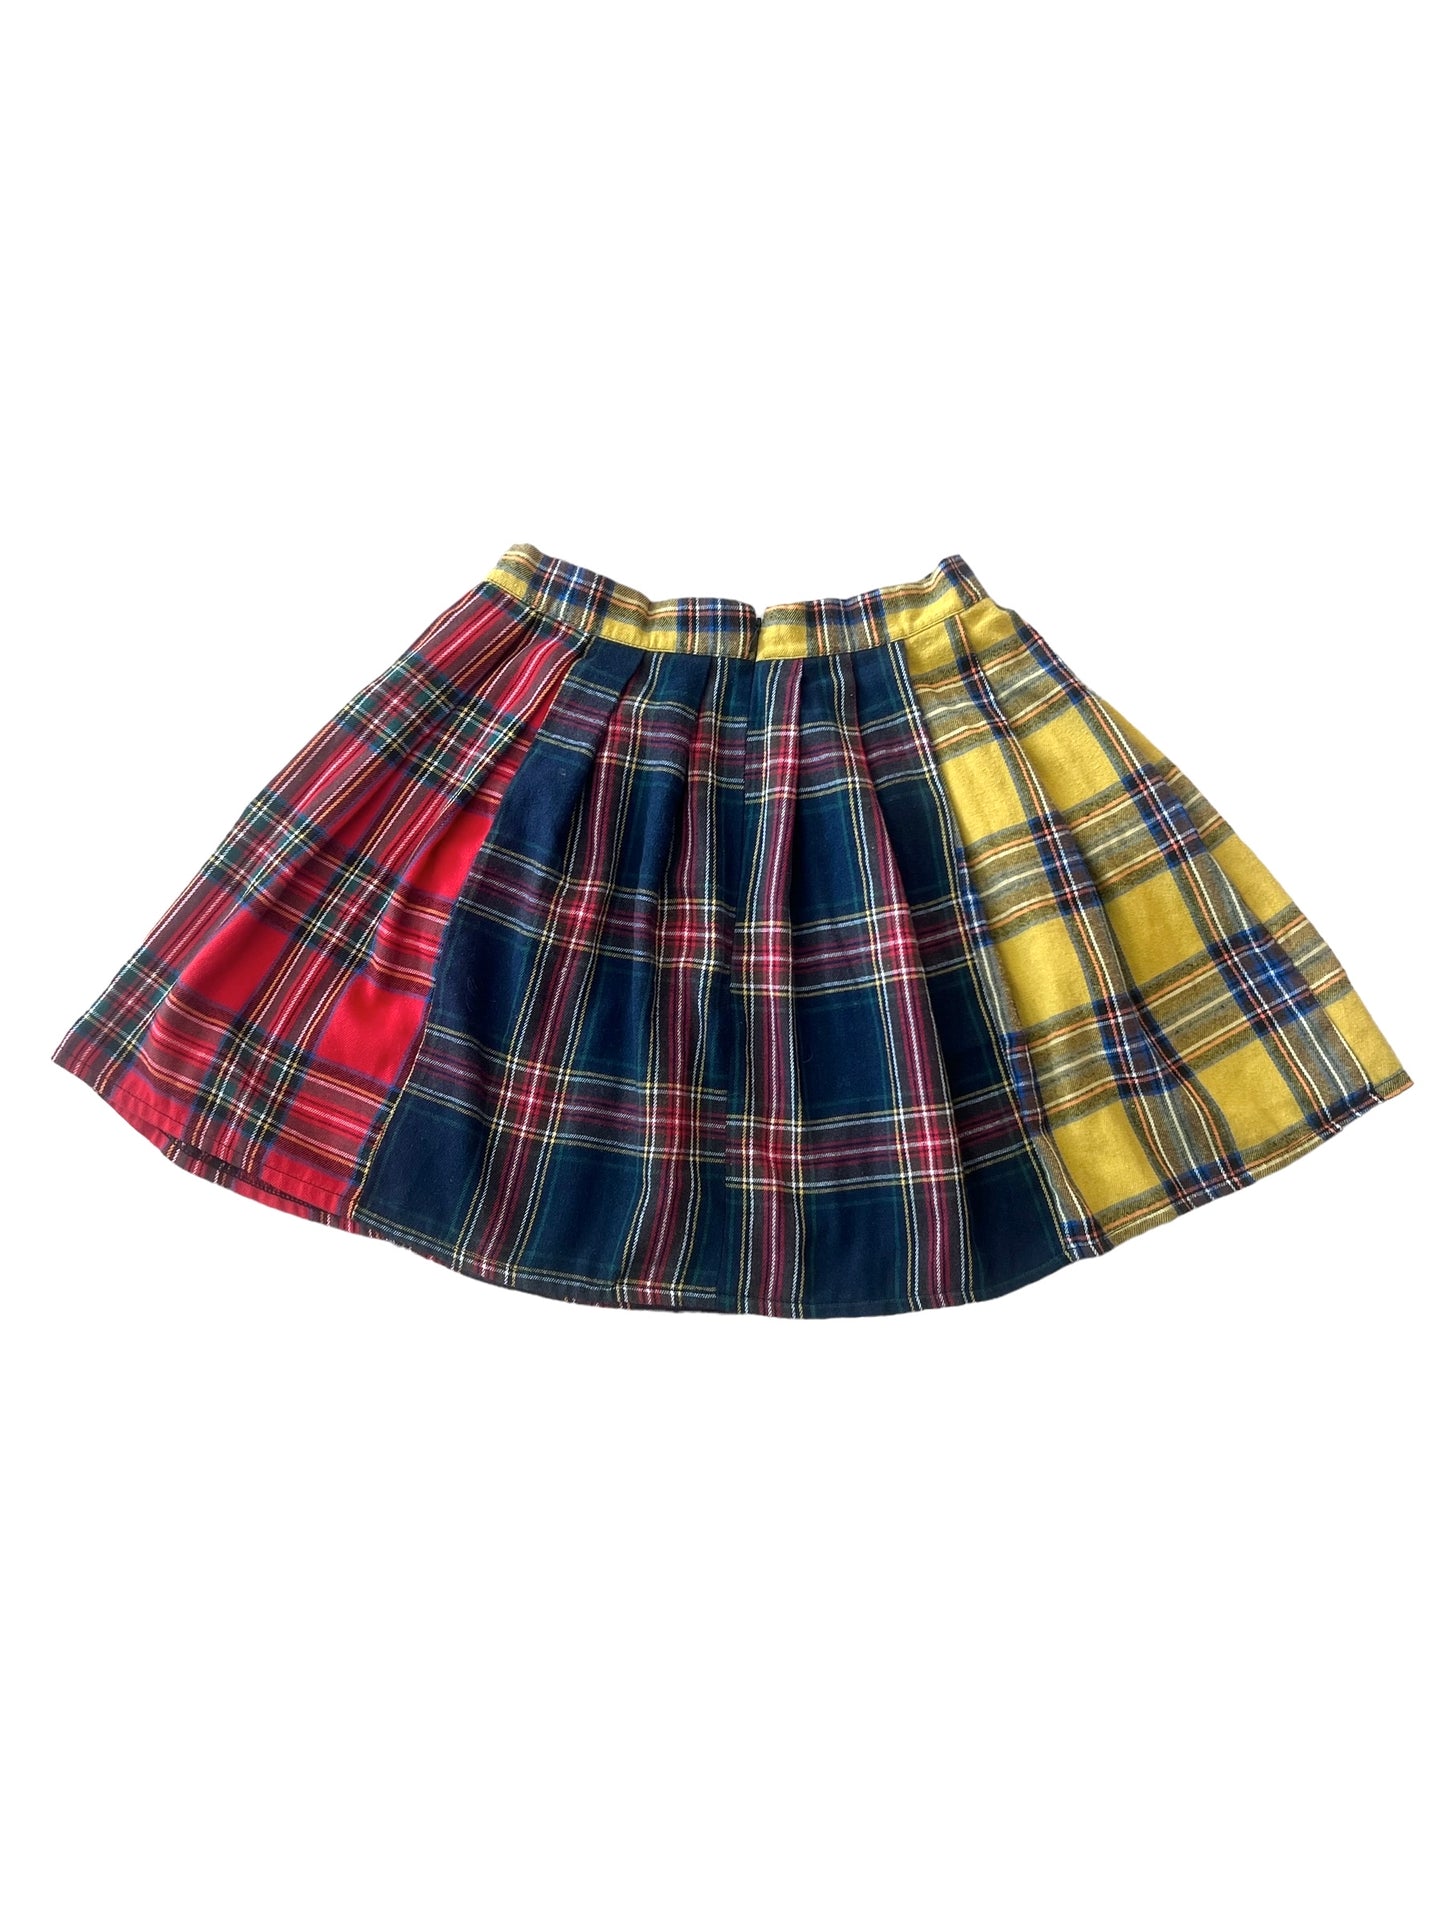 Shein Plaid Skirt